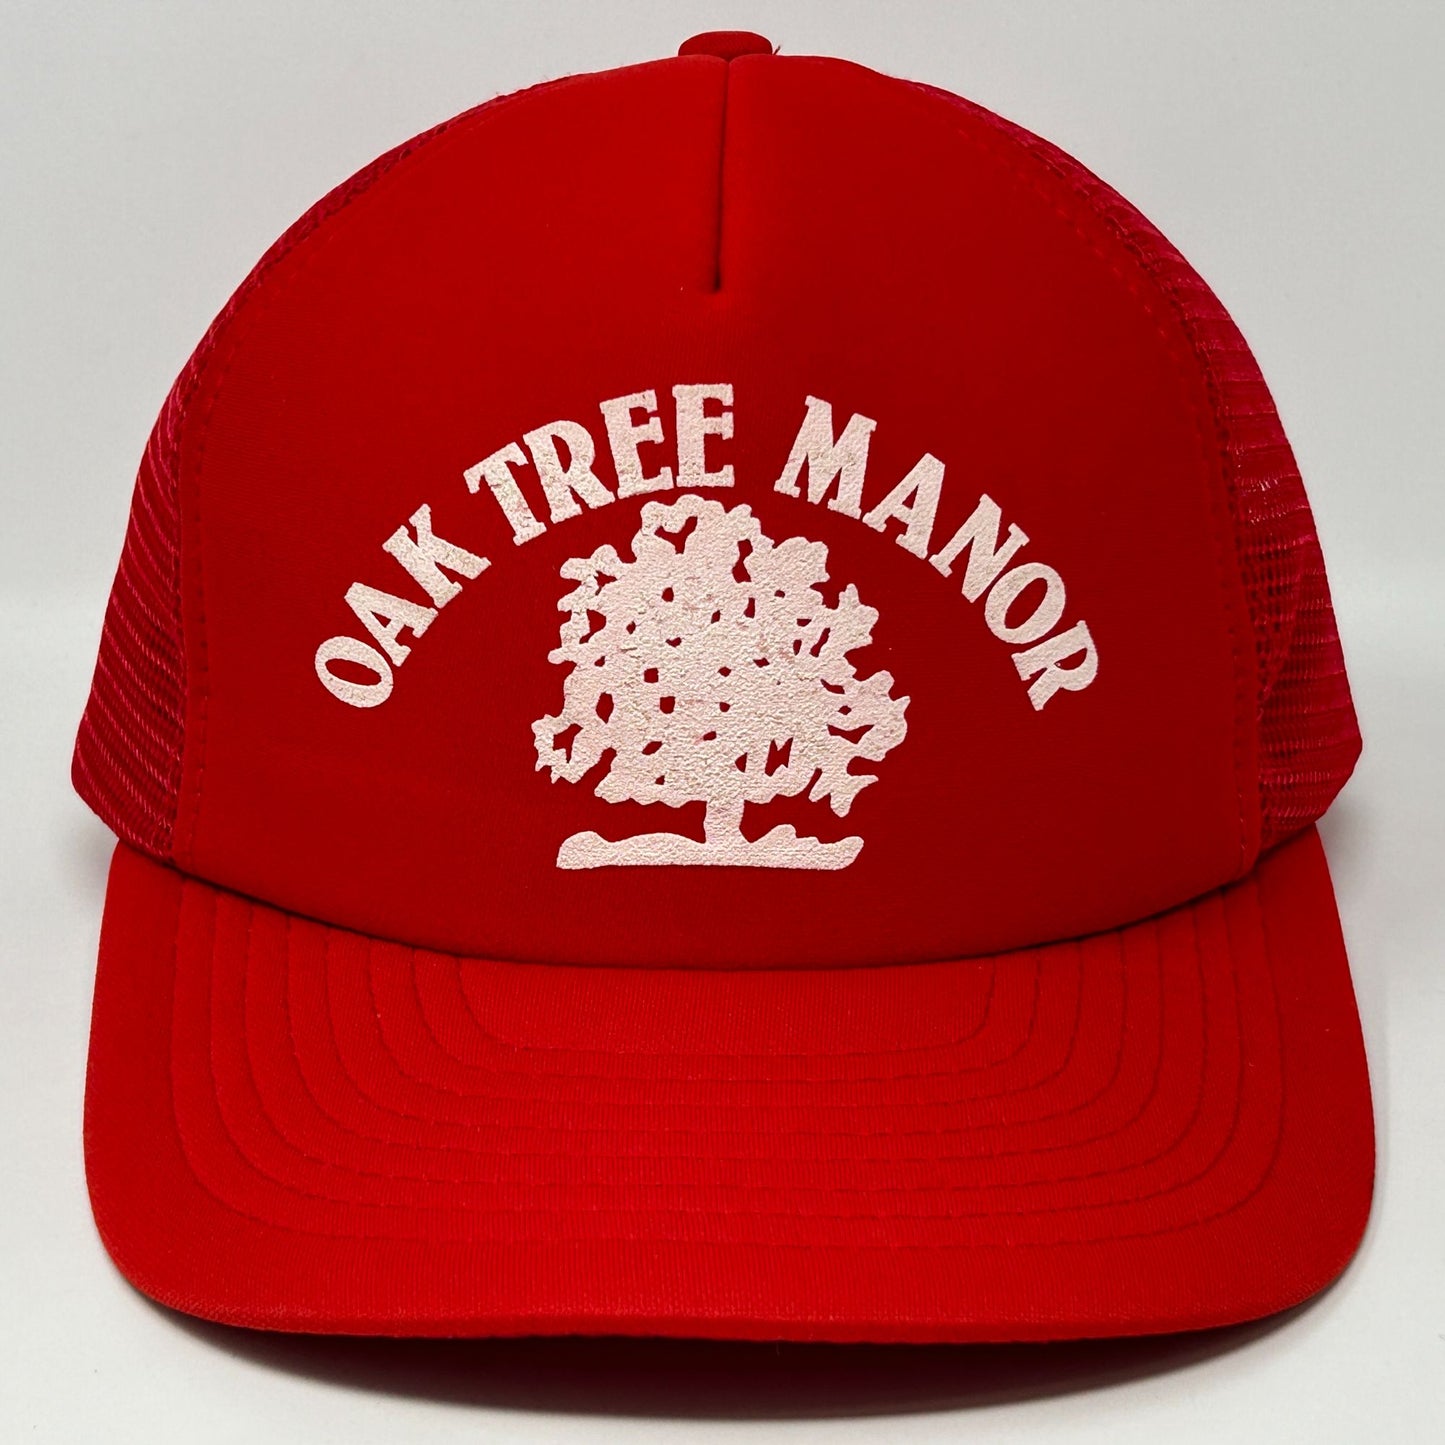 Oak Tree Manor Snapback Trucker Hat Vintage 80s Spring Texas Mesh Baseball Cap